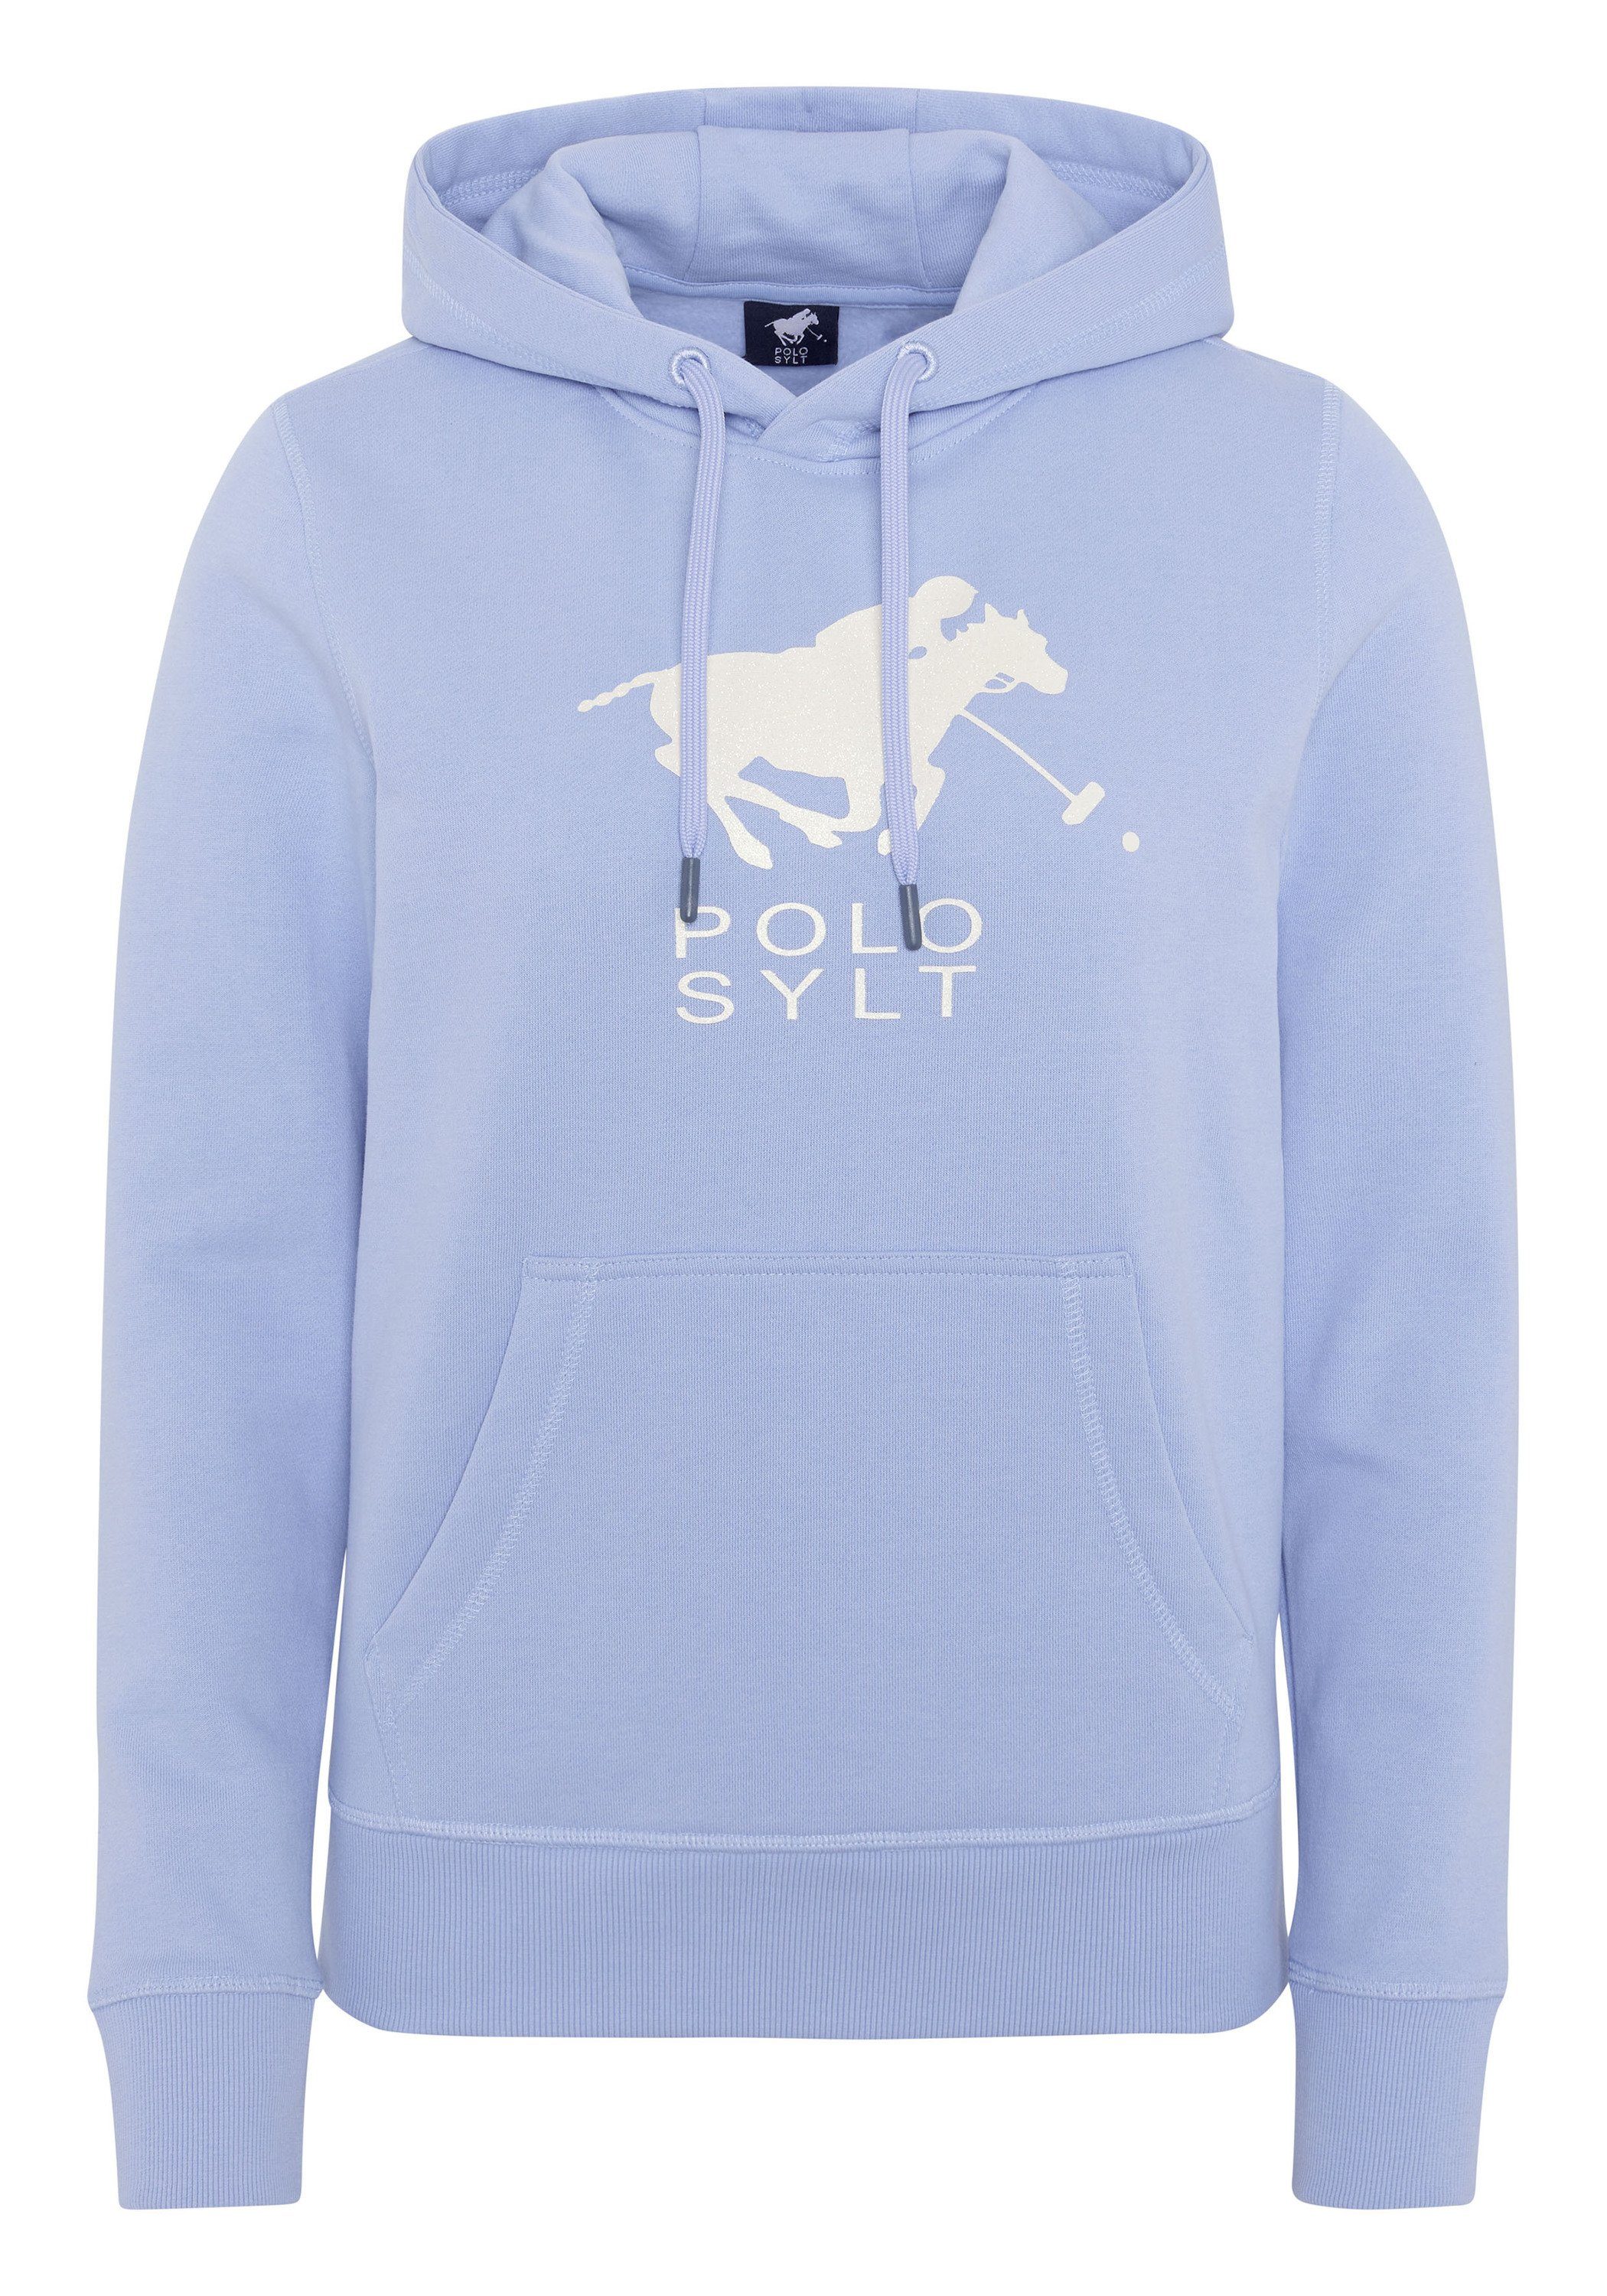 Polo Sylt Kapuzensweatshirt mit Polo Sylt Frontprint Brunnera Blue